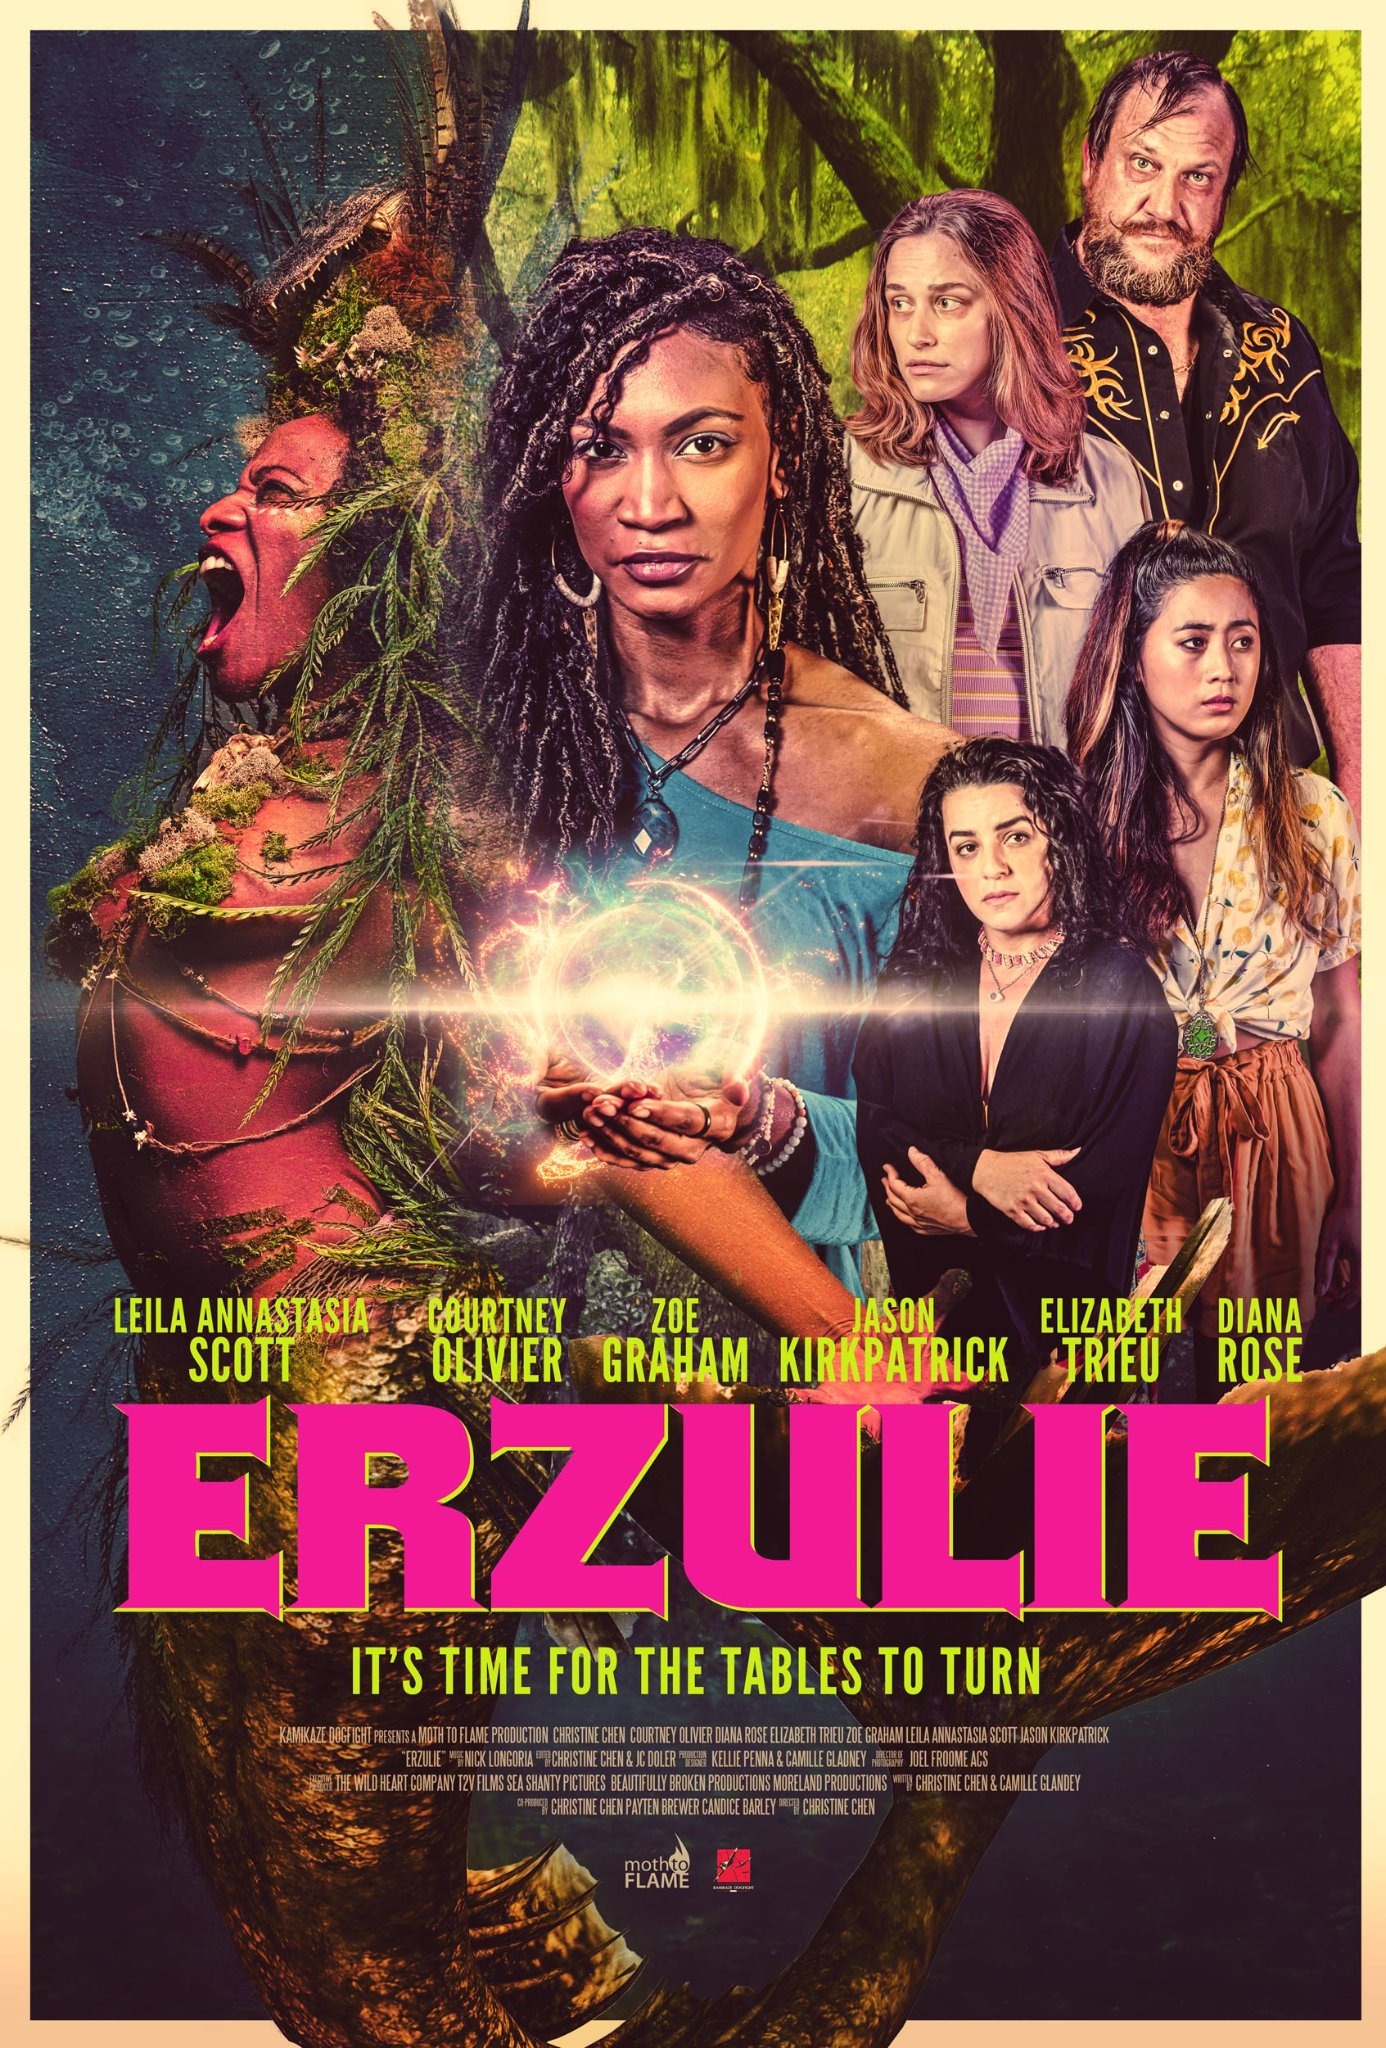 Mega Sized Movie Poster Image for Erzulie 